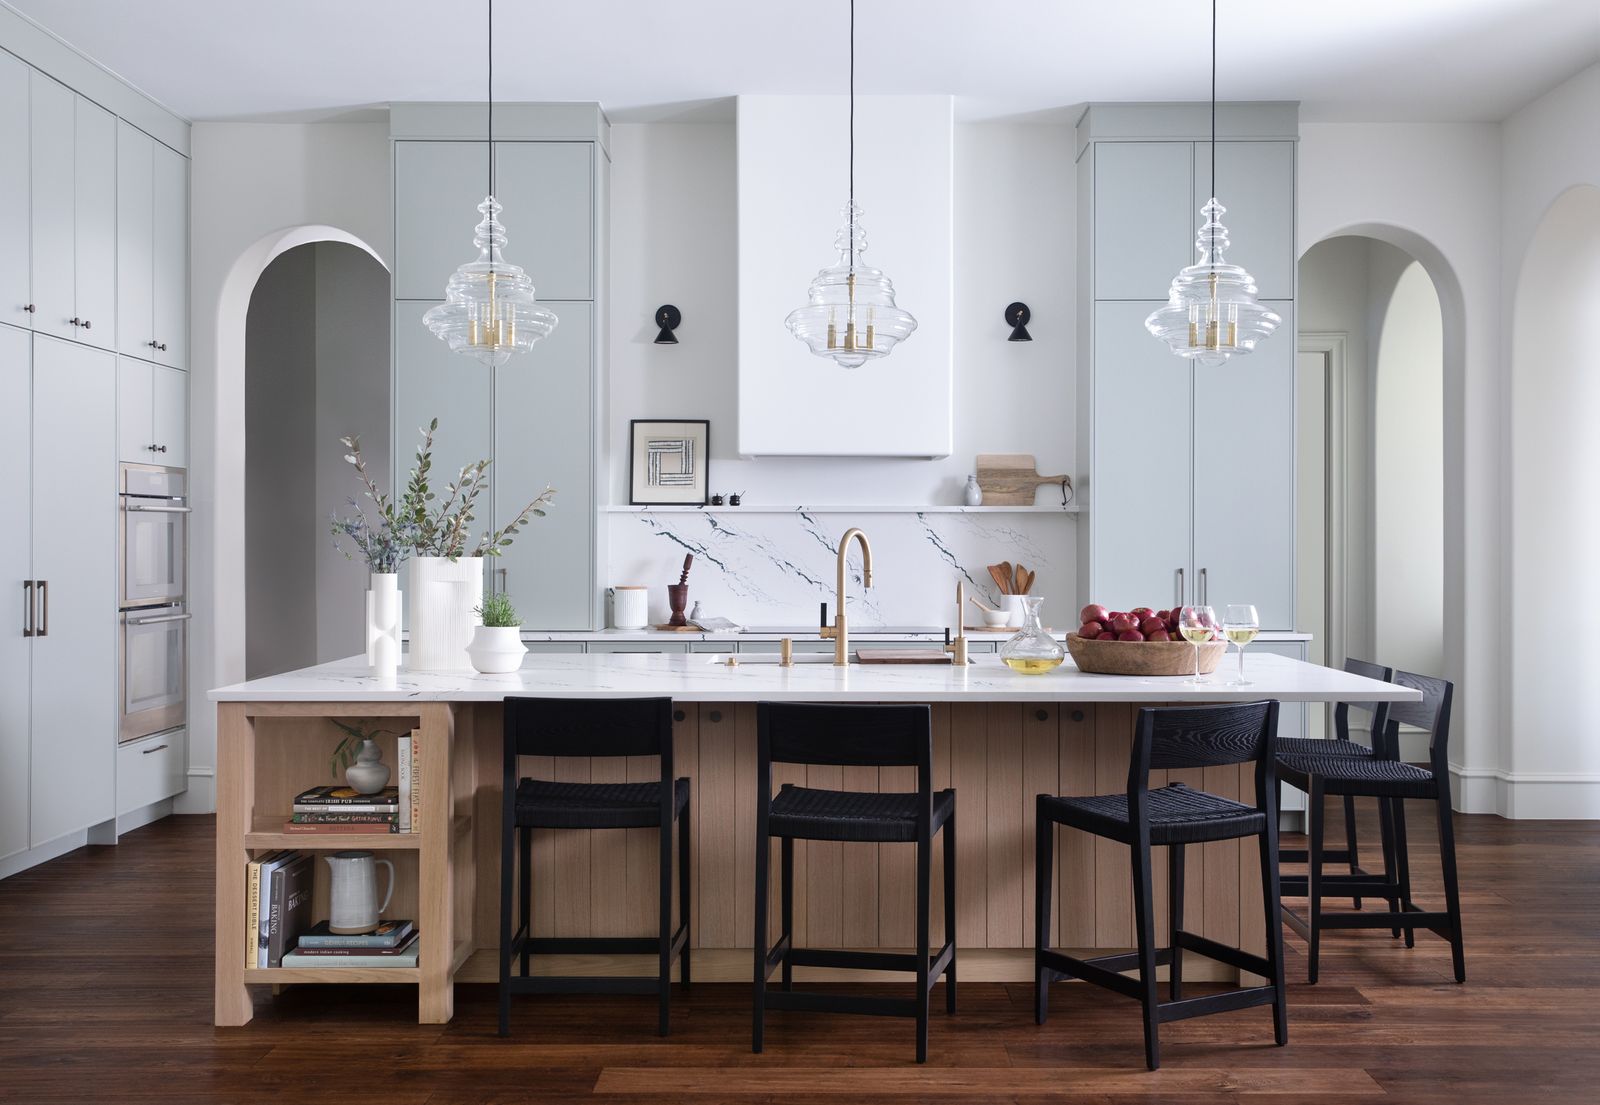 This kitchen reno uses the perfect minimalist palette | Livingetc